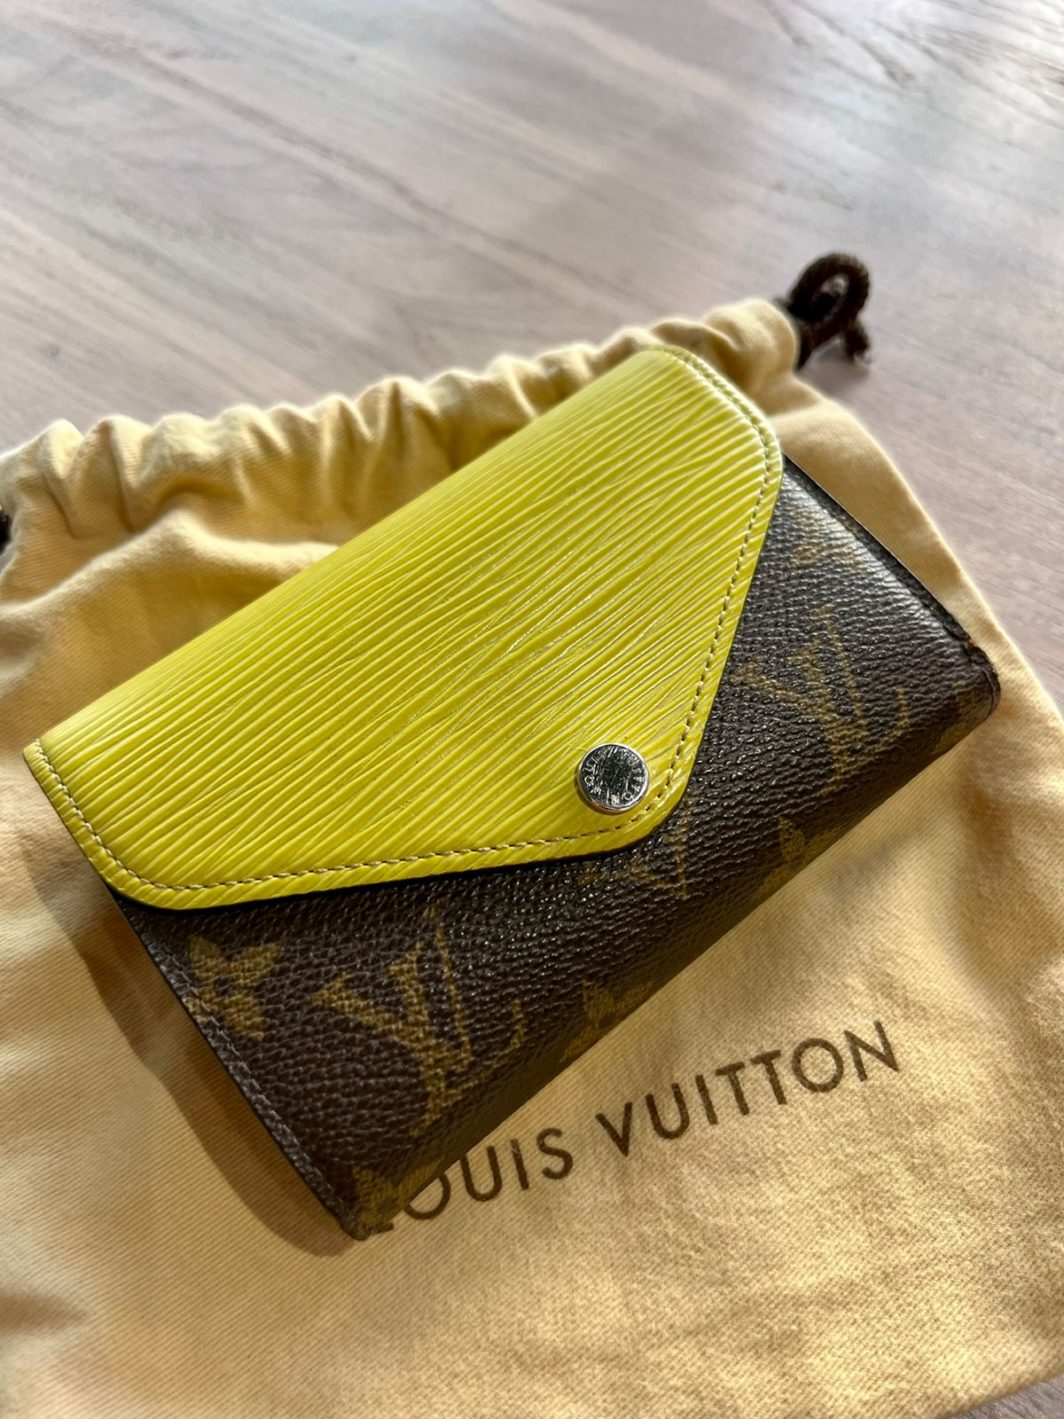 Louis Vuitton кошелек Mary-Lou Compact